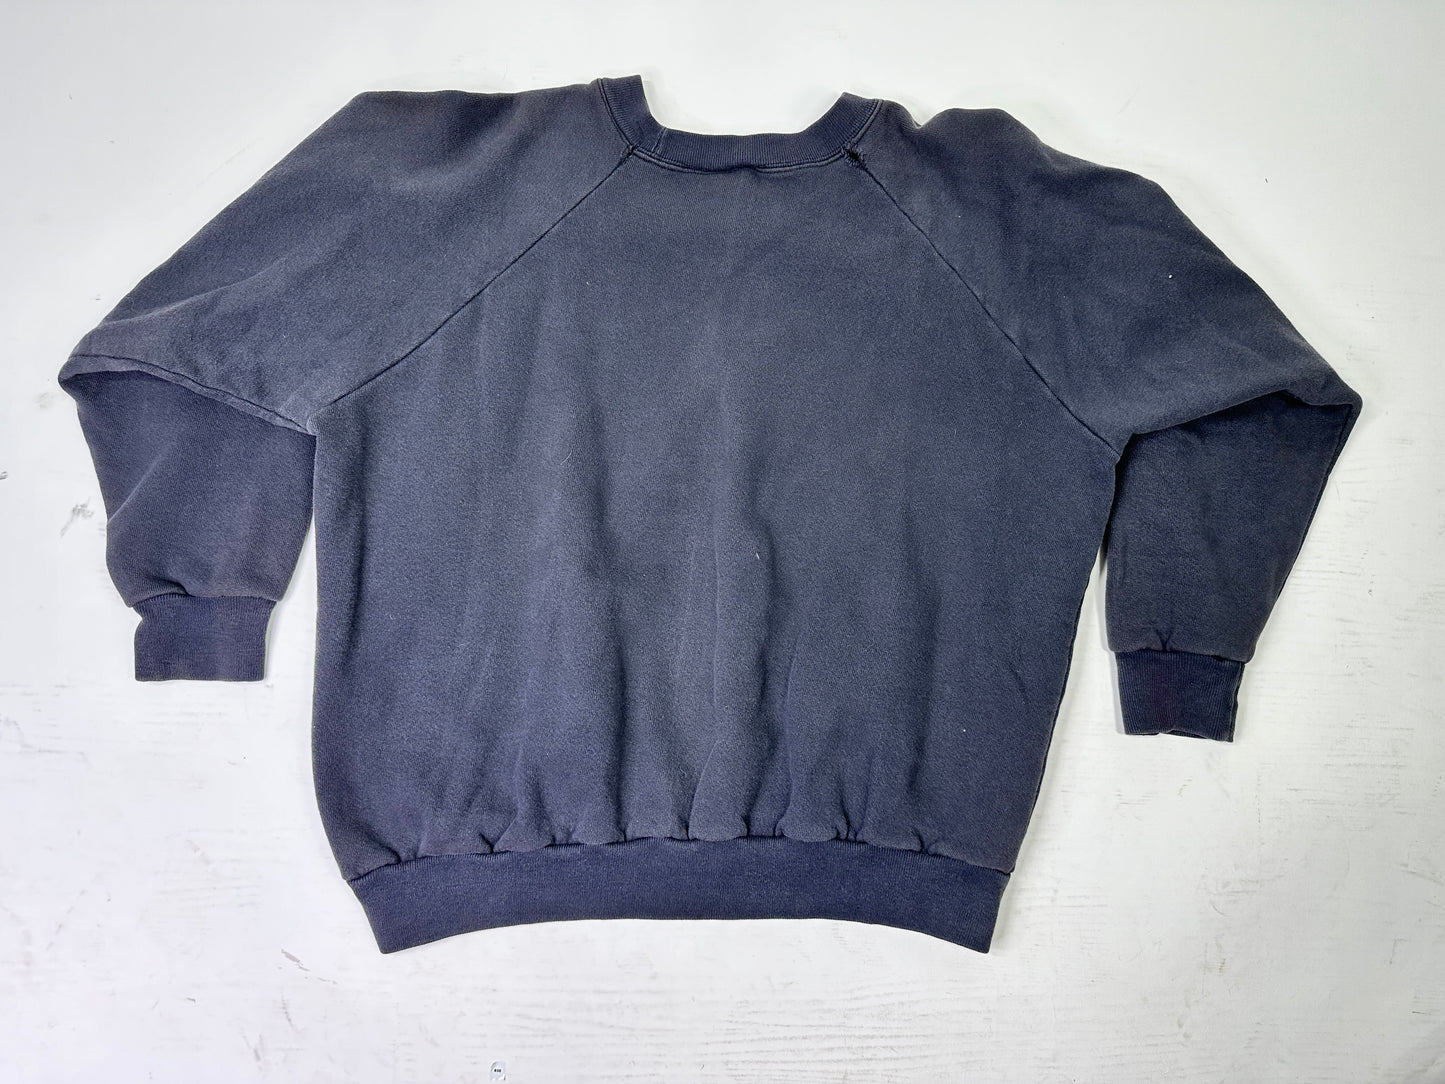 1990s “The First King” Crew Neck Sweatshirt